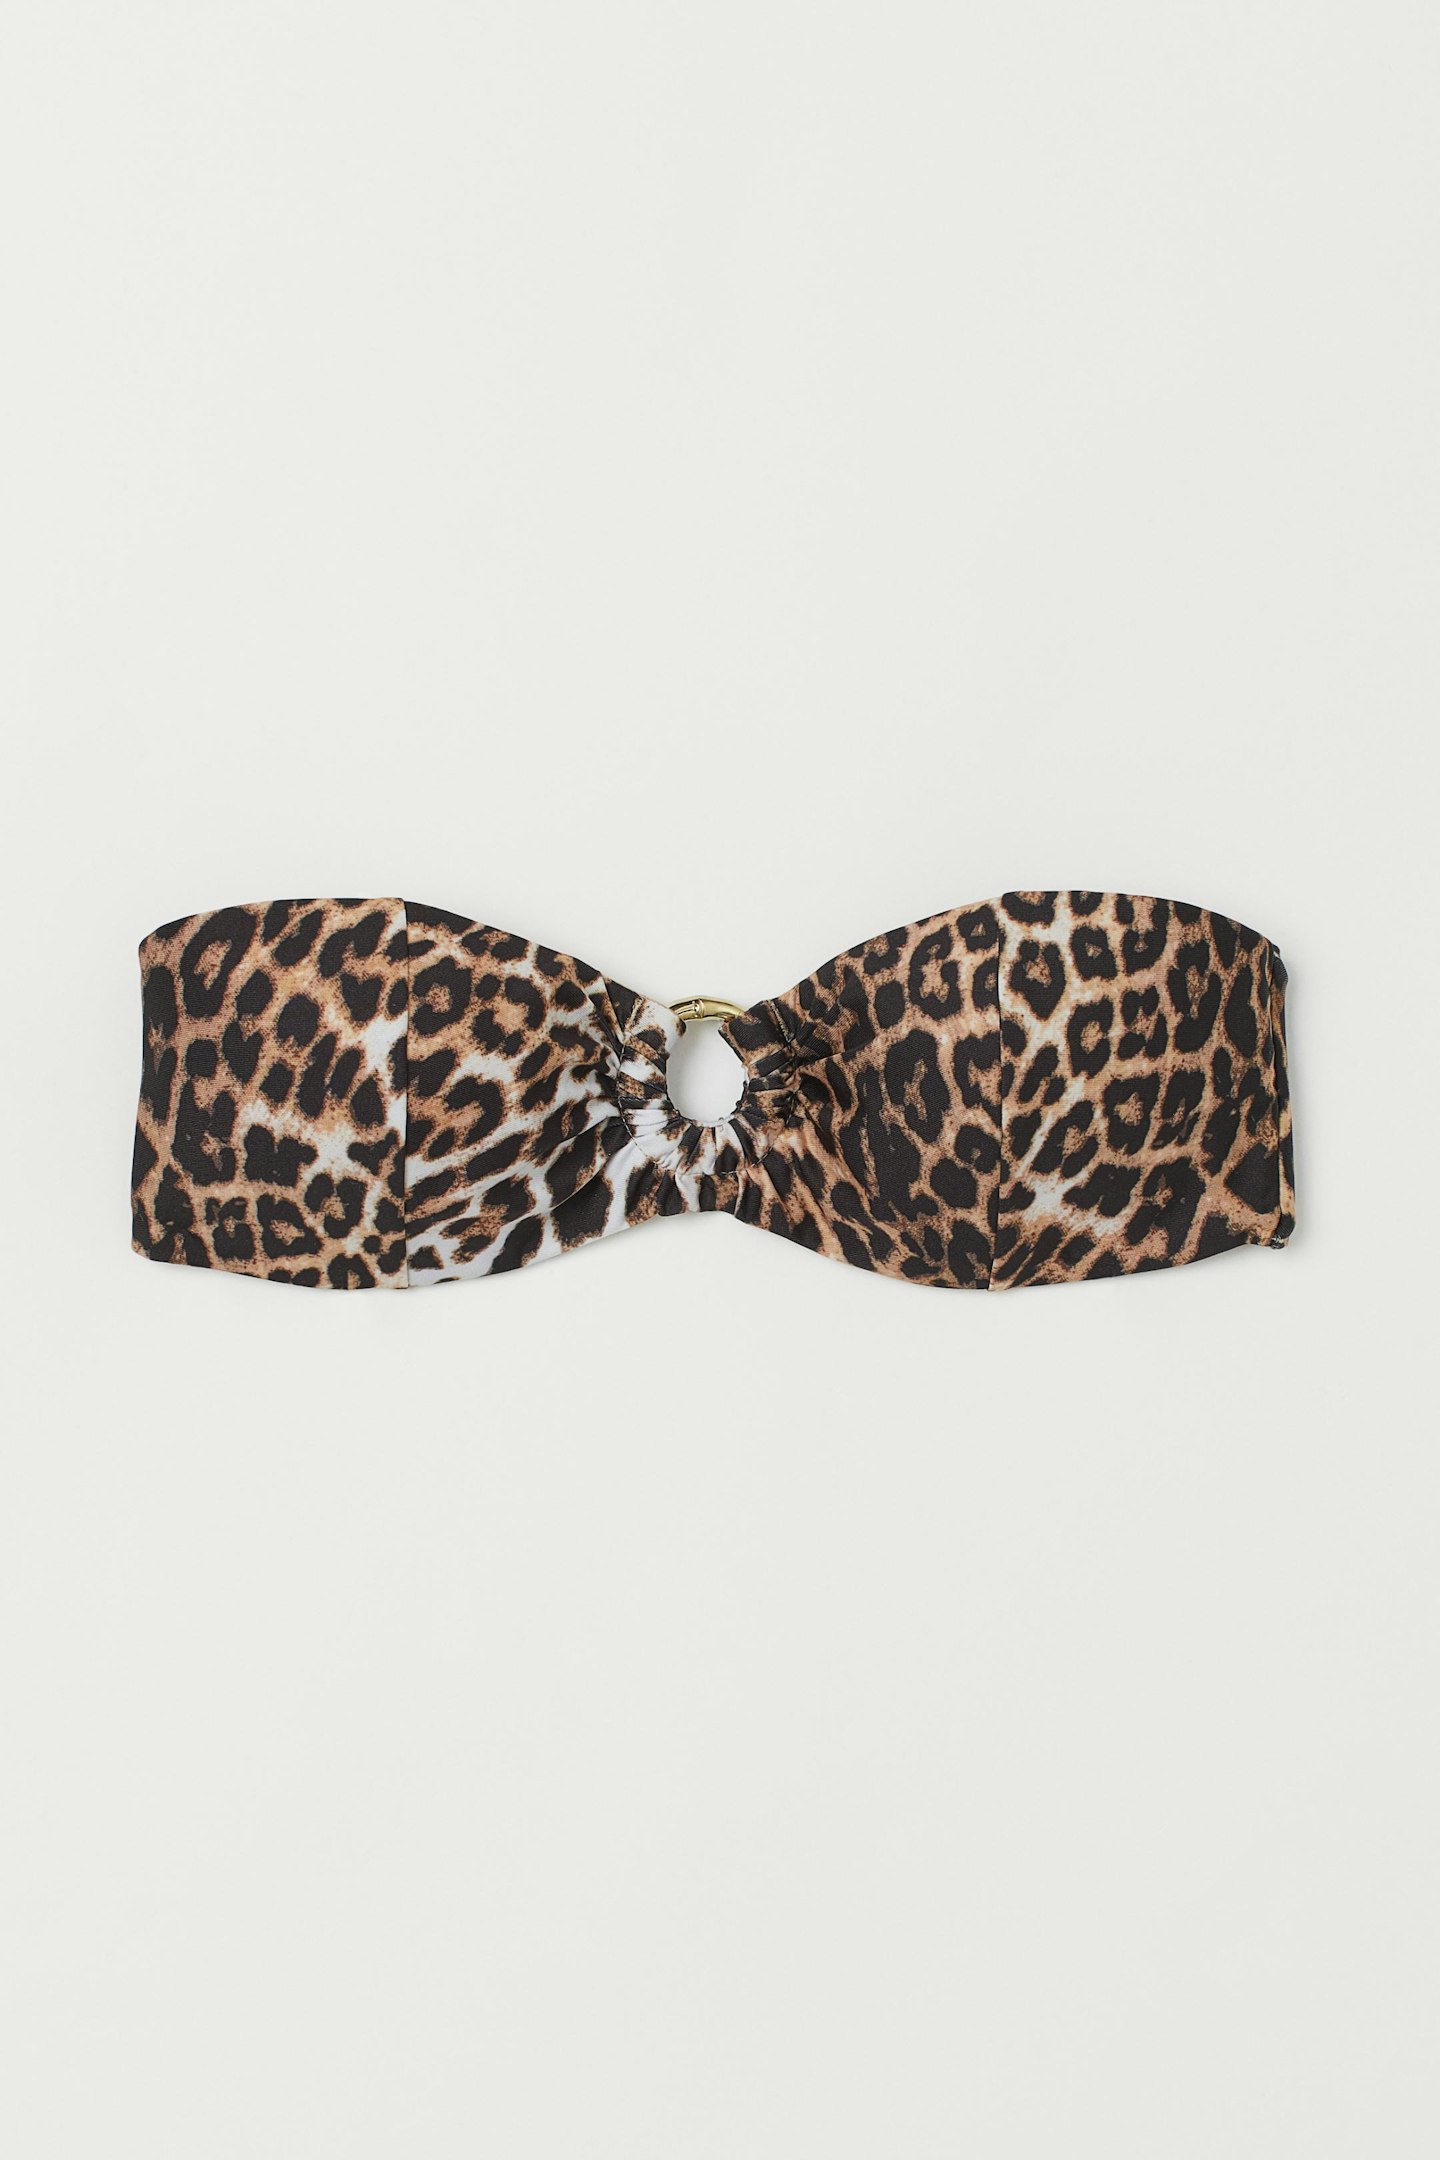 H&M, Padded Bandeau Bikini Top, £14.99